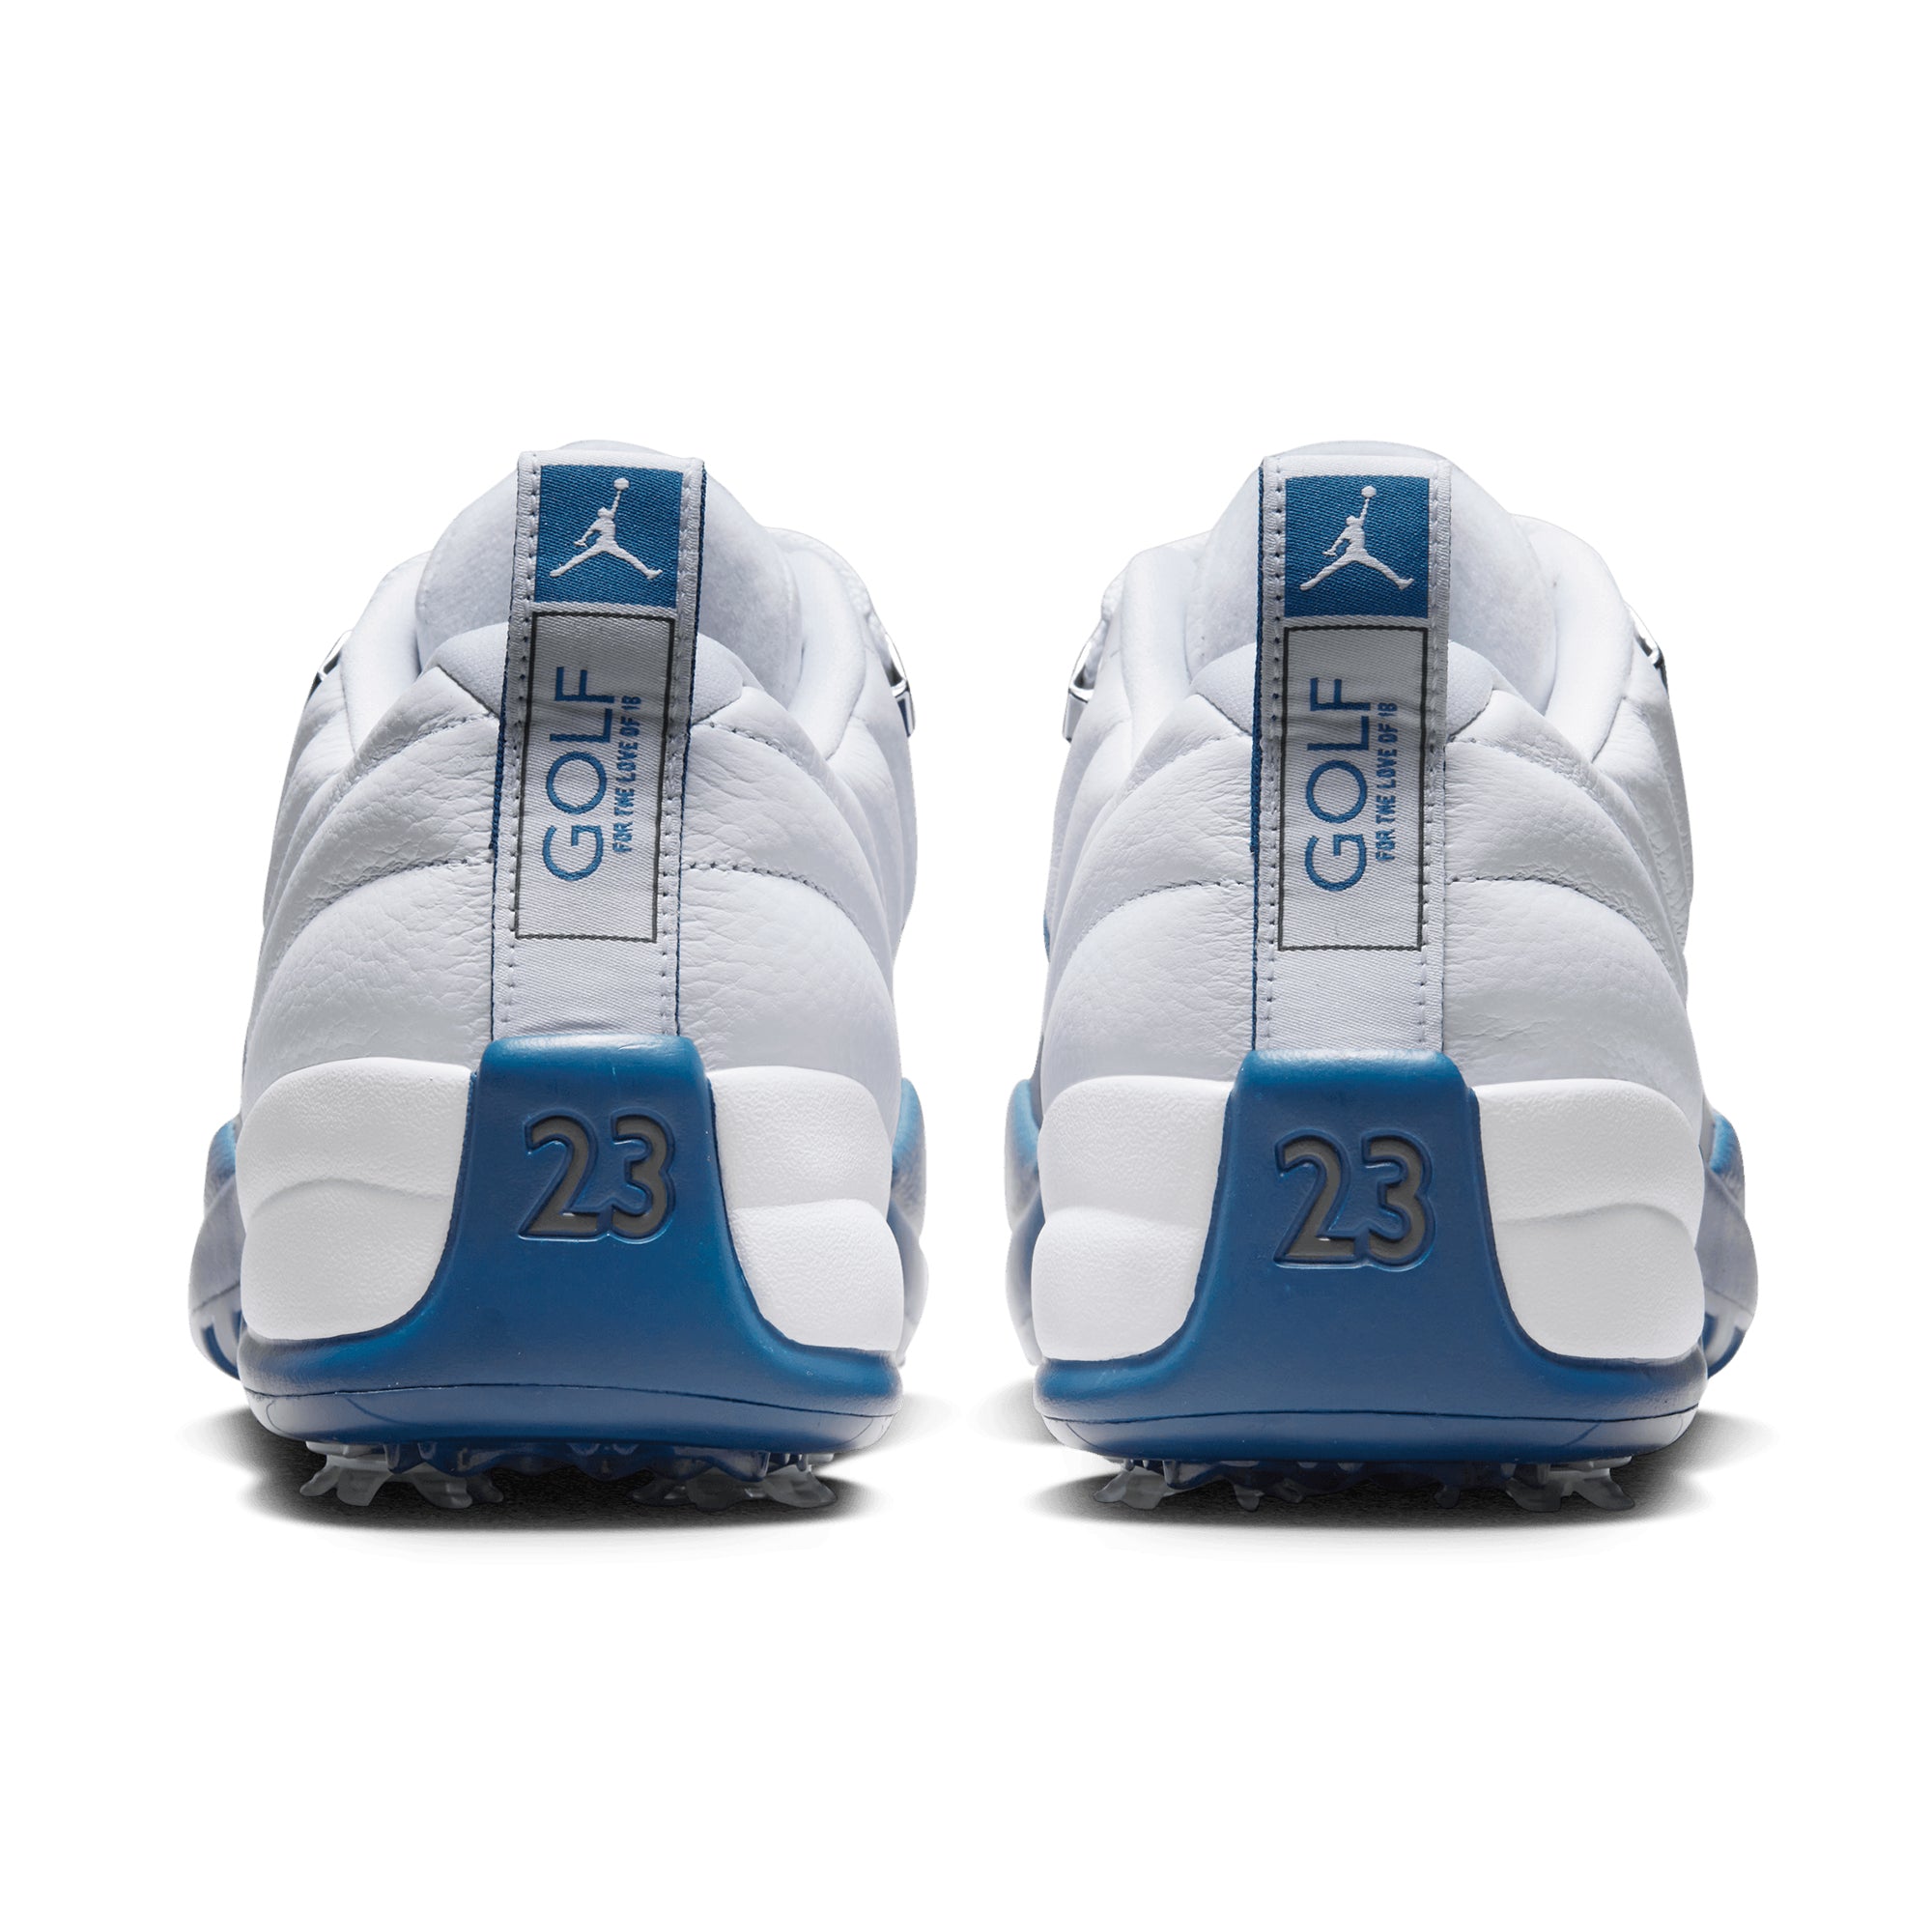 nike-air-jordan-12-low-golf-shoes-dh4120-white-metallic-silver-french-blue-101